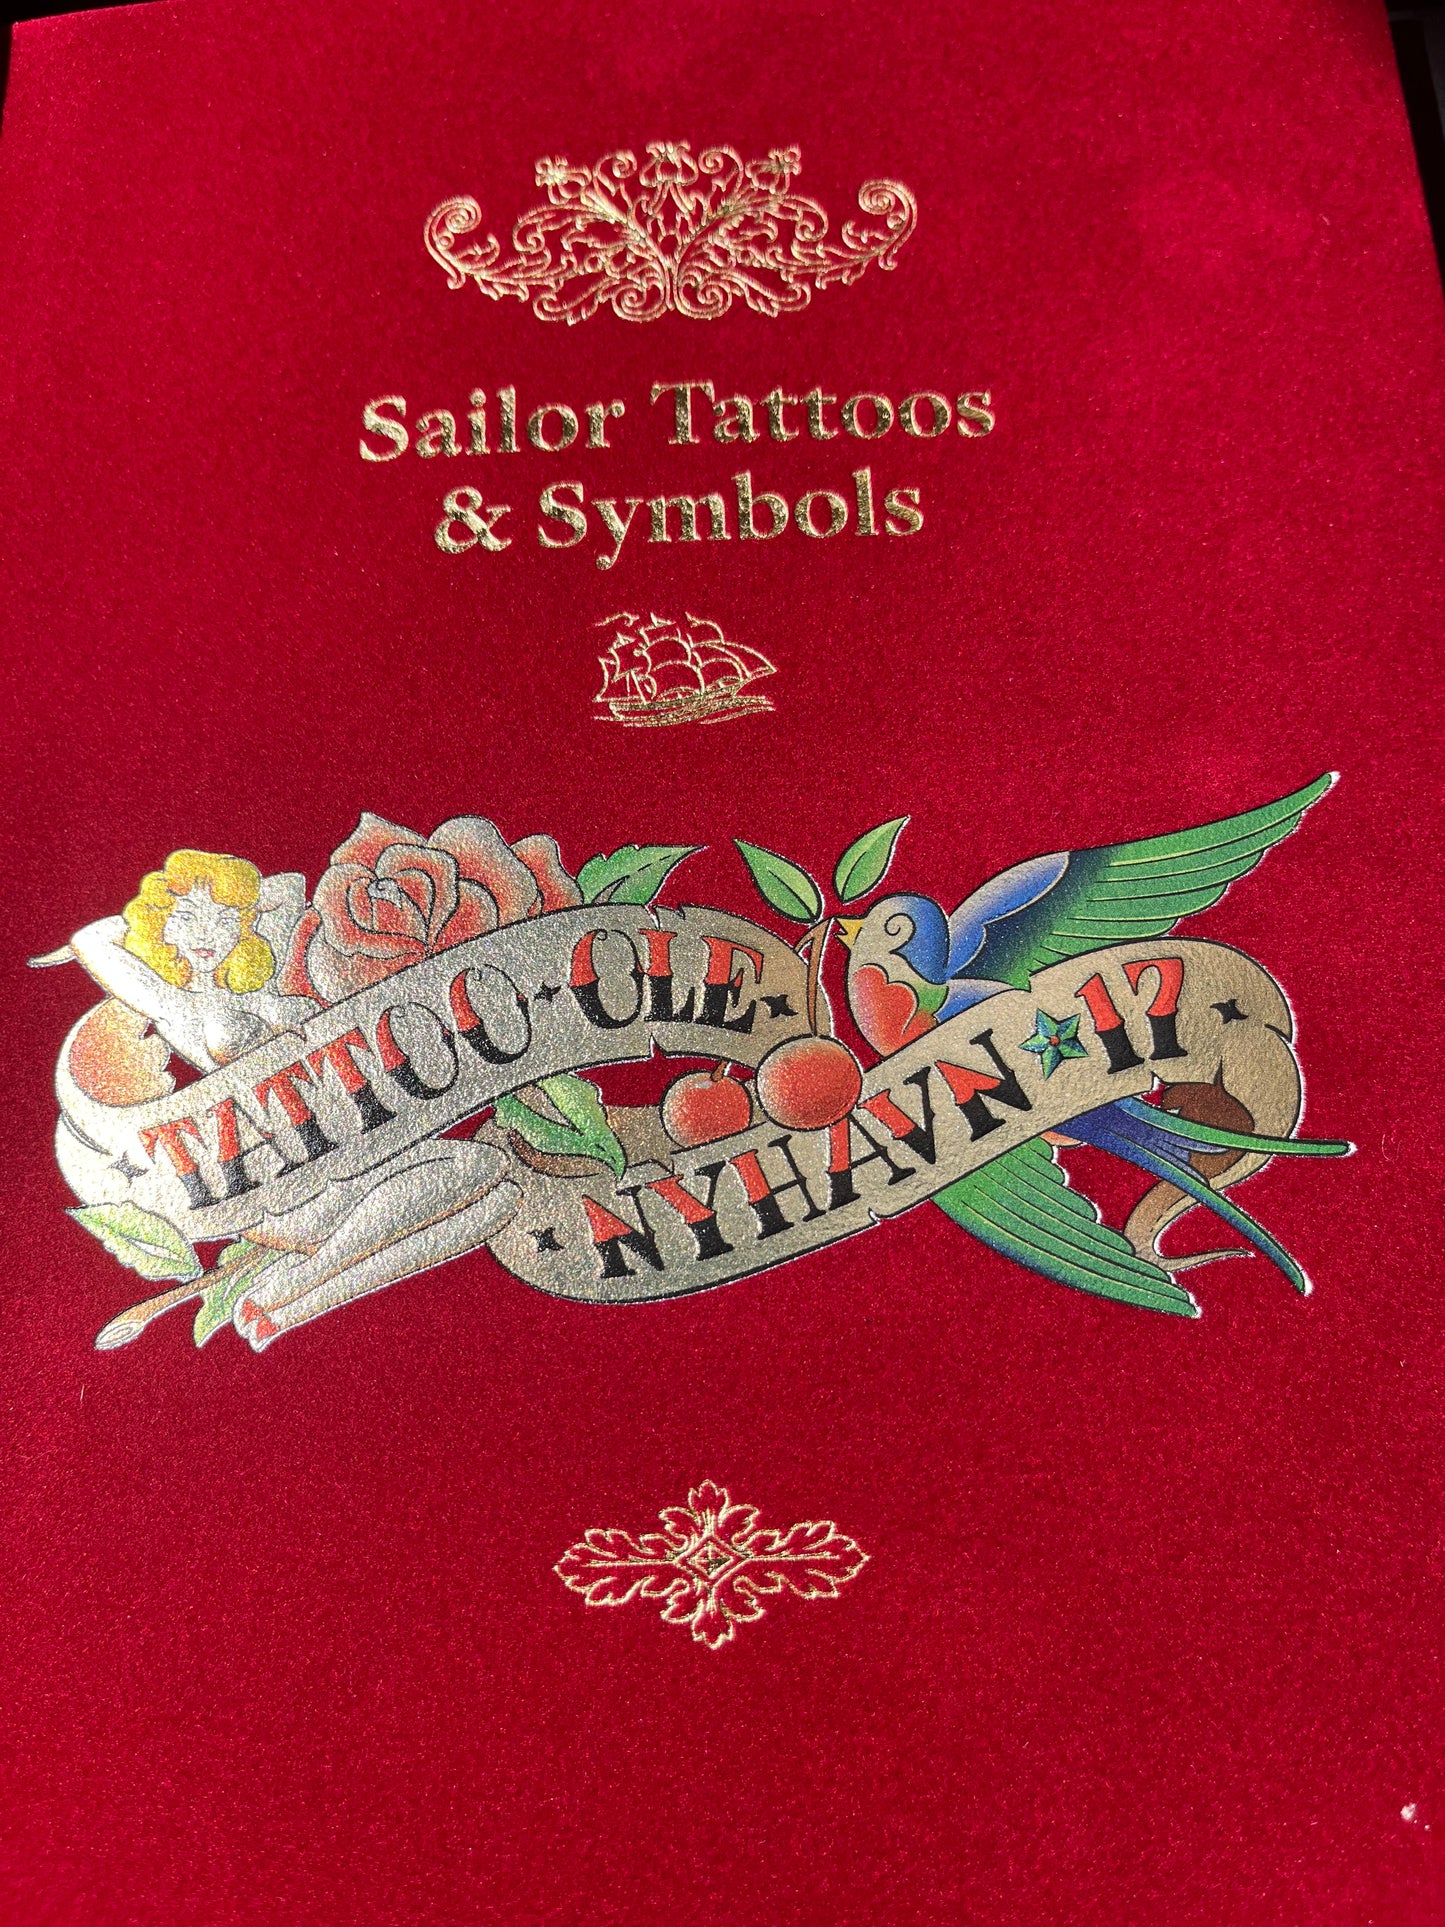 Sailor tattoos & symbols -  By Majbritt "Lille Ole" Petersen, eng. version front